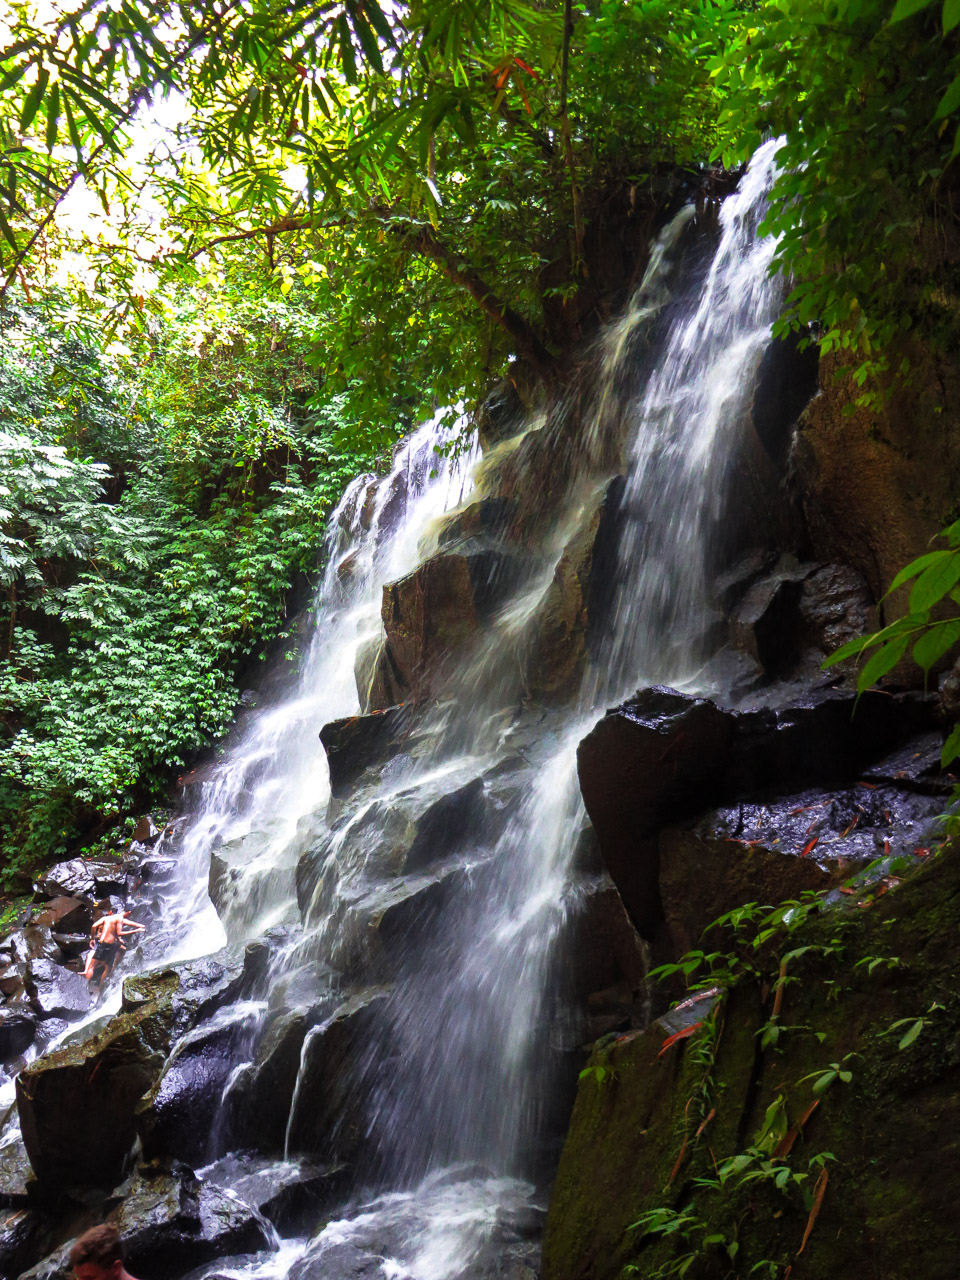 Kanto Lampo Waterfall - Bali